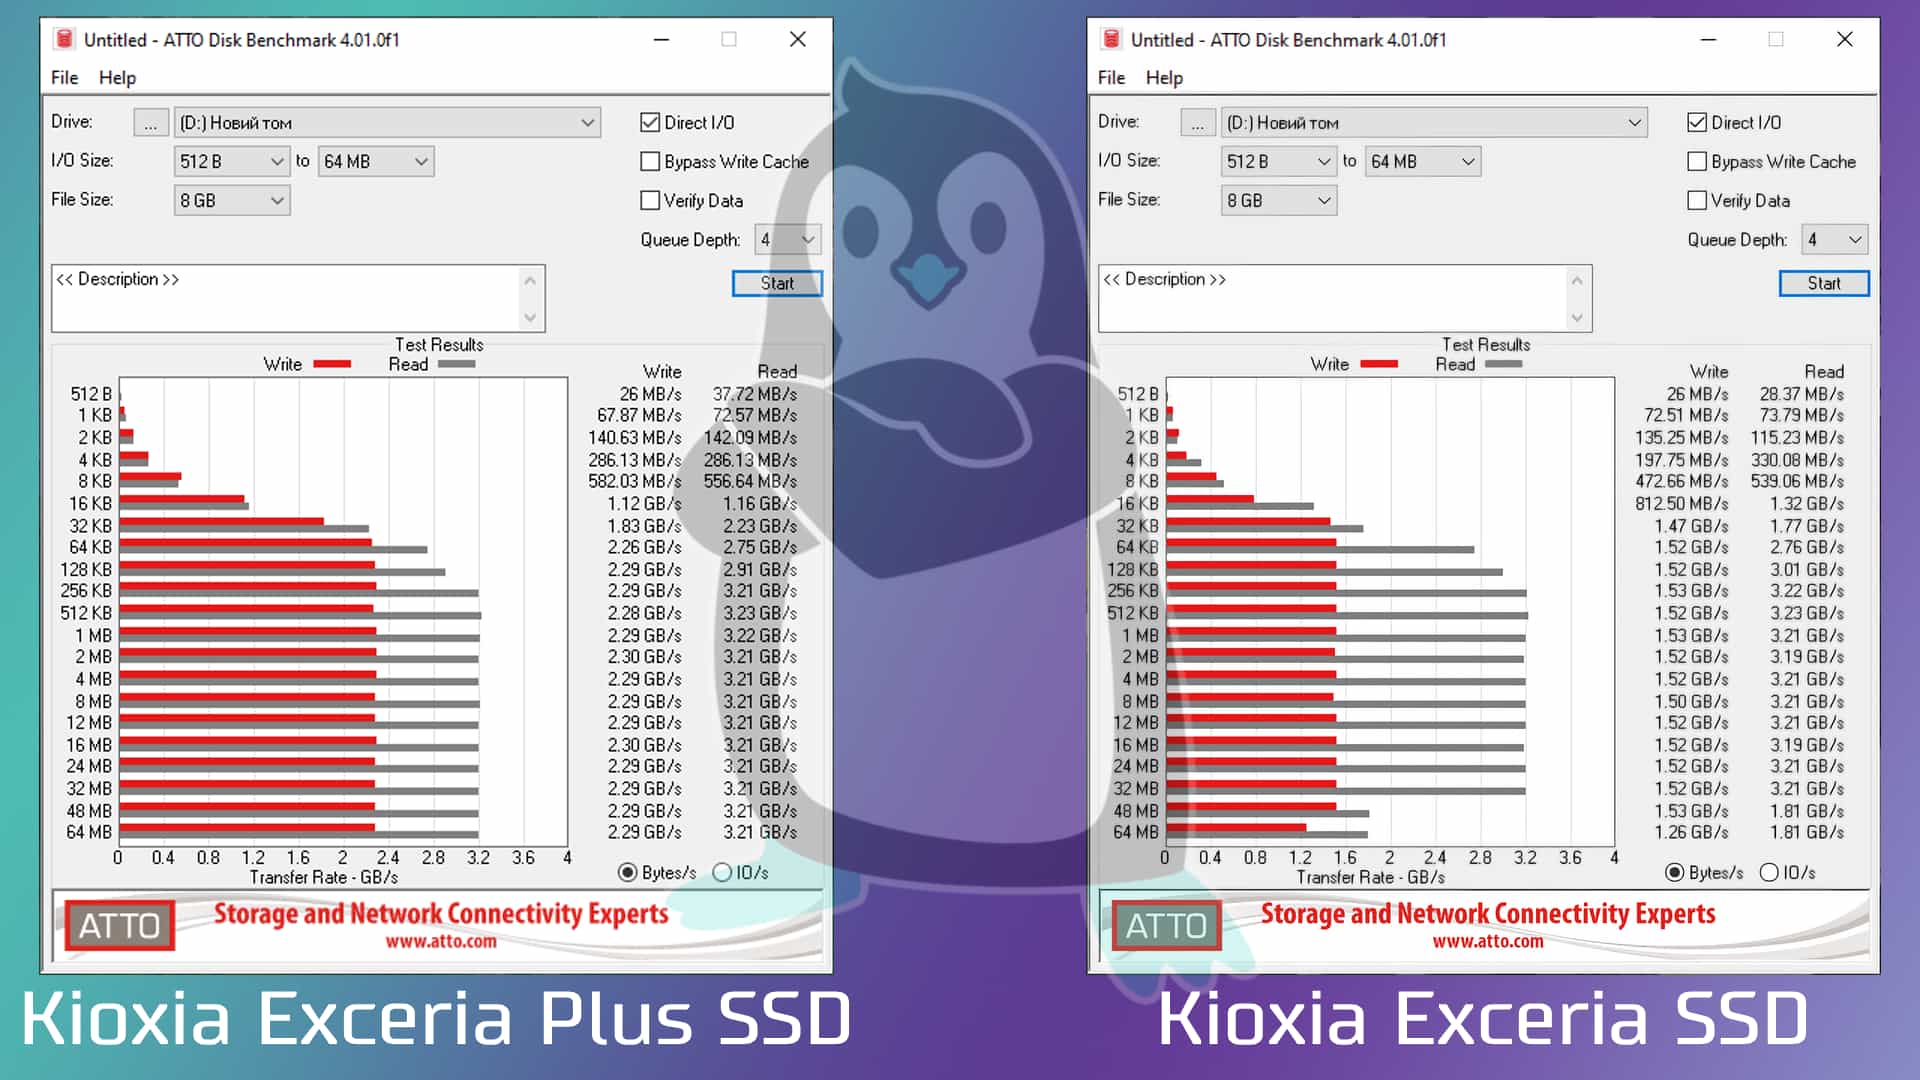 Kioxia Exceria Plus SSD vs Kioxia Exceria SSD (ATTO Disk Benchmark 4.01.0f1)